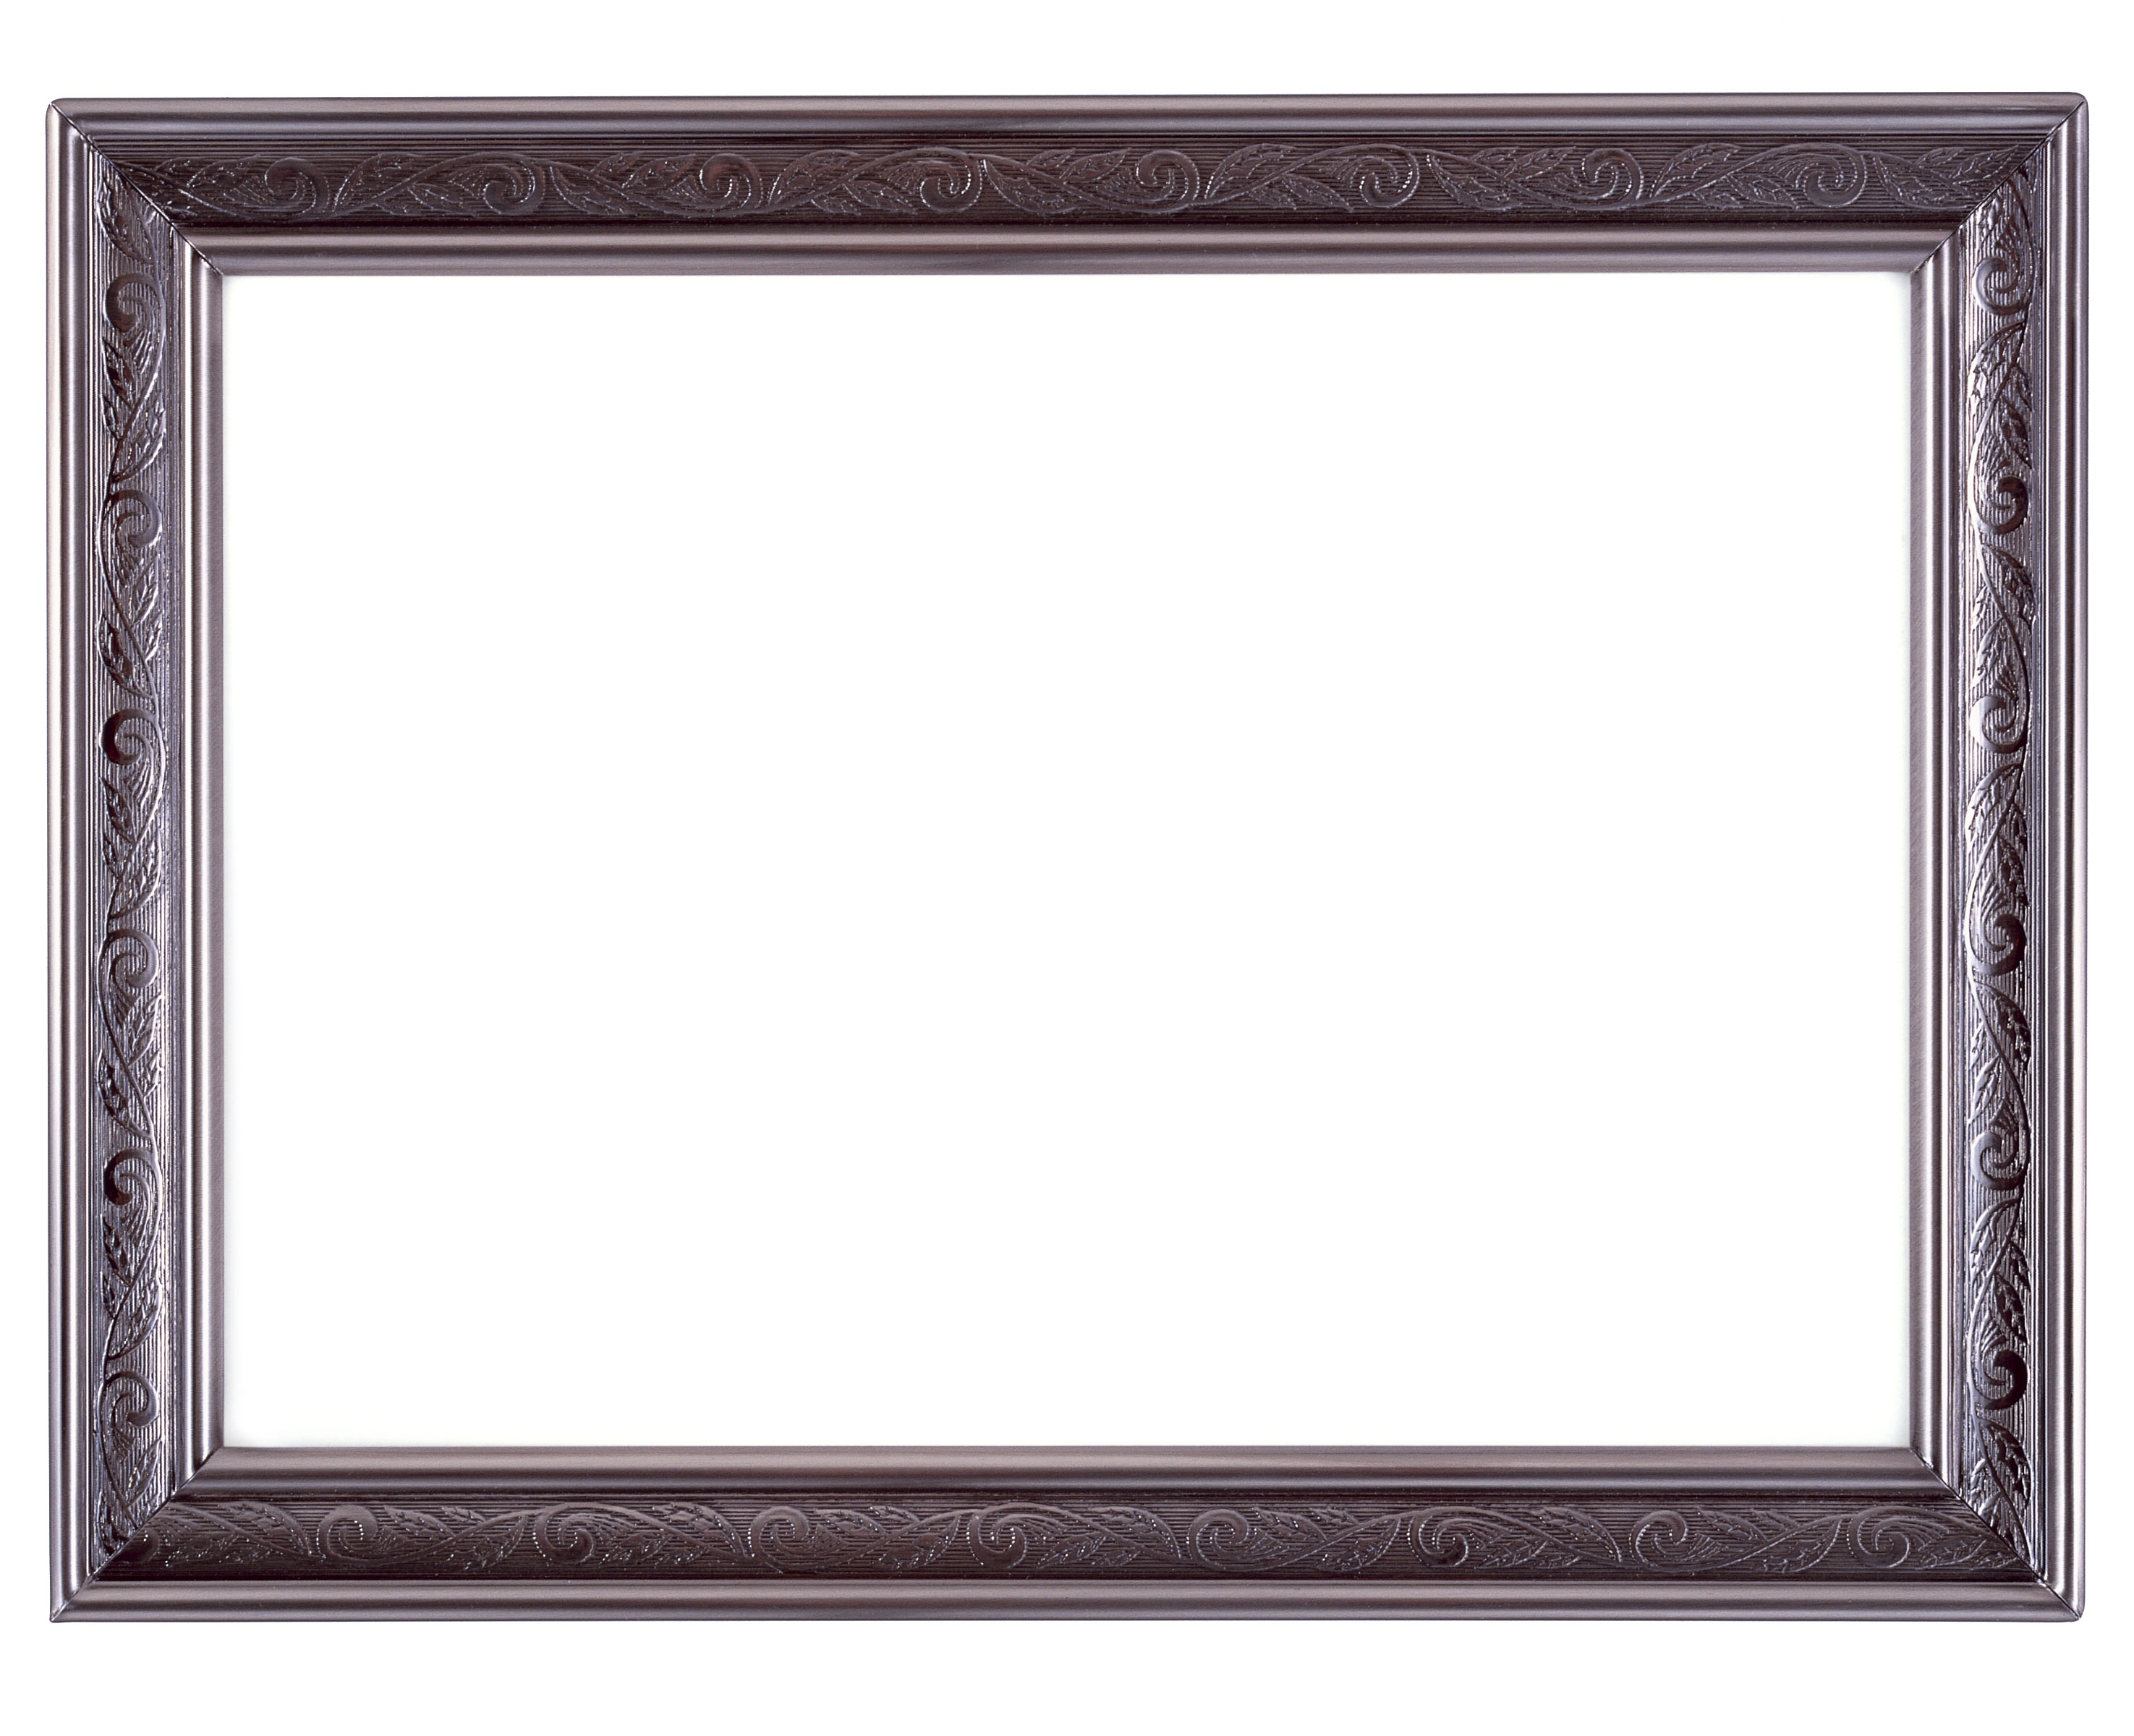 Marcos de espejos de poliuretano, marco 18x24, foto marcos uk, tamaños de marco de fotos, marcos de Navidad